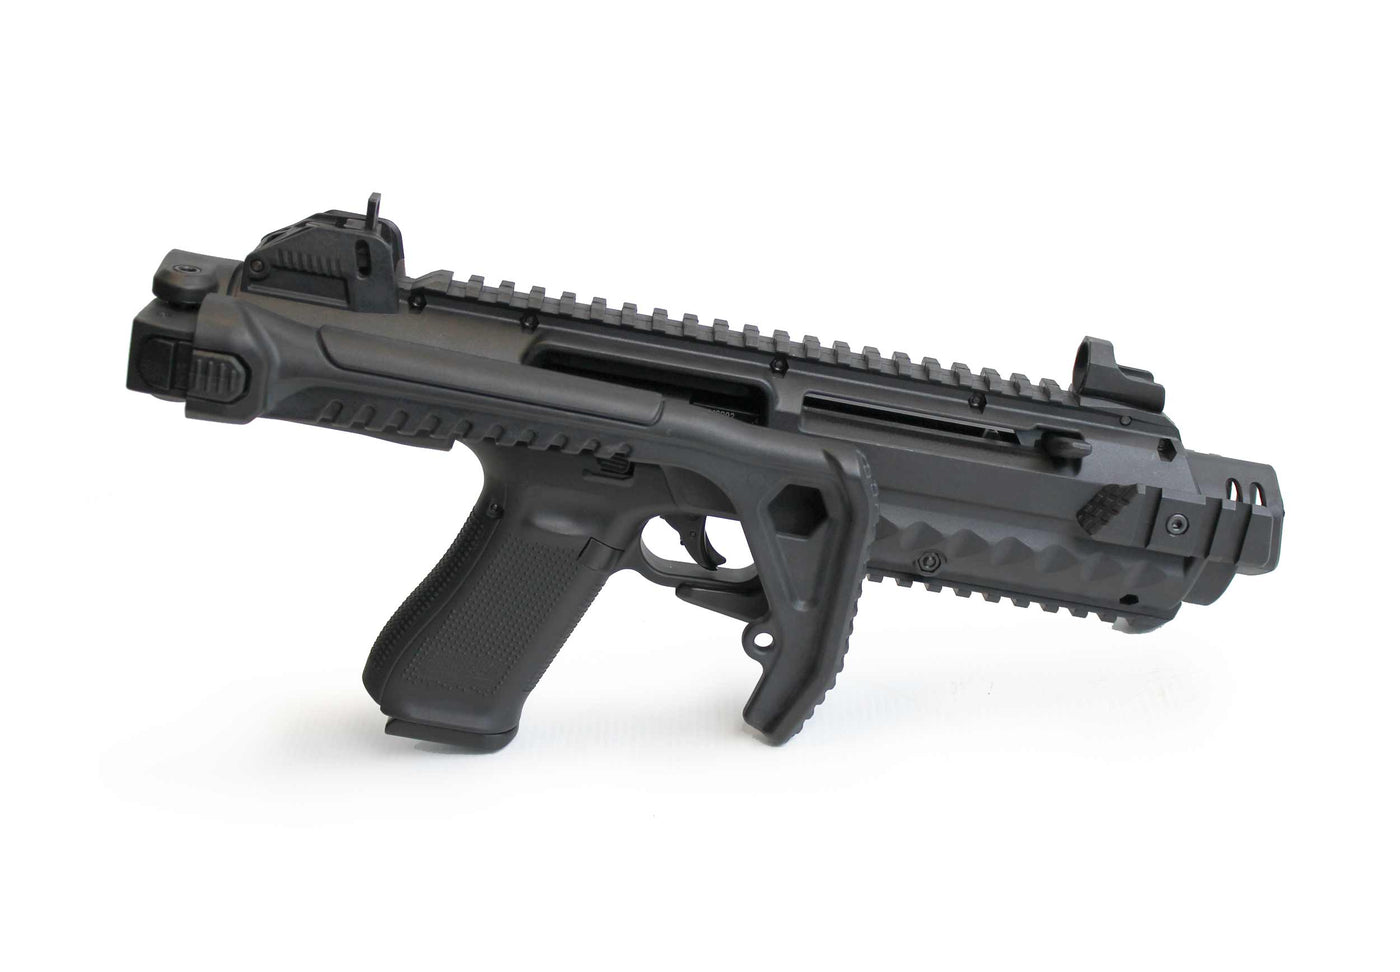 Armorer Works Tactical Carbine Glock 17 Conversion Kit - VX Series